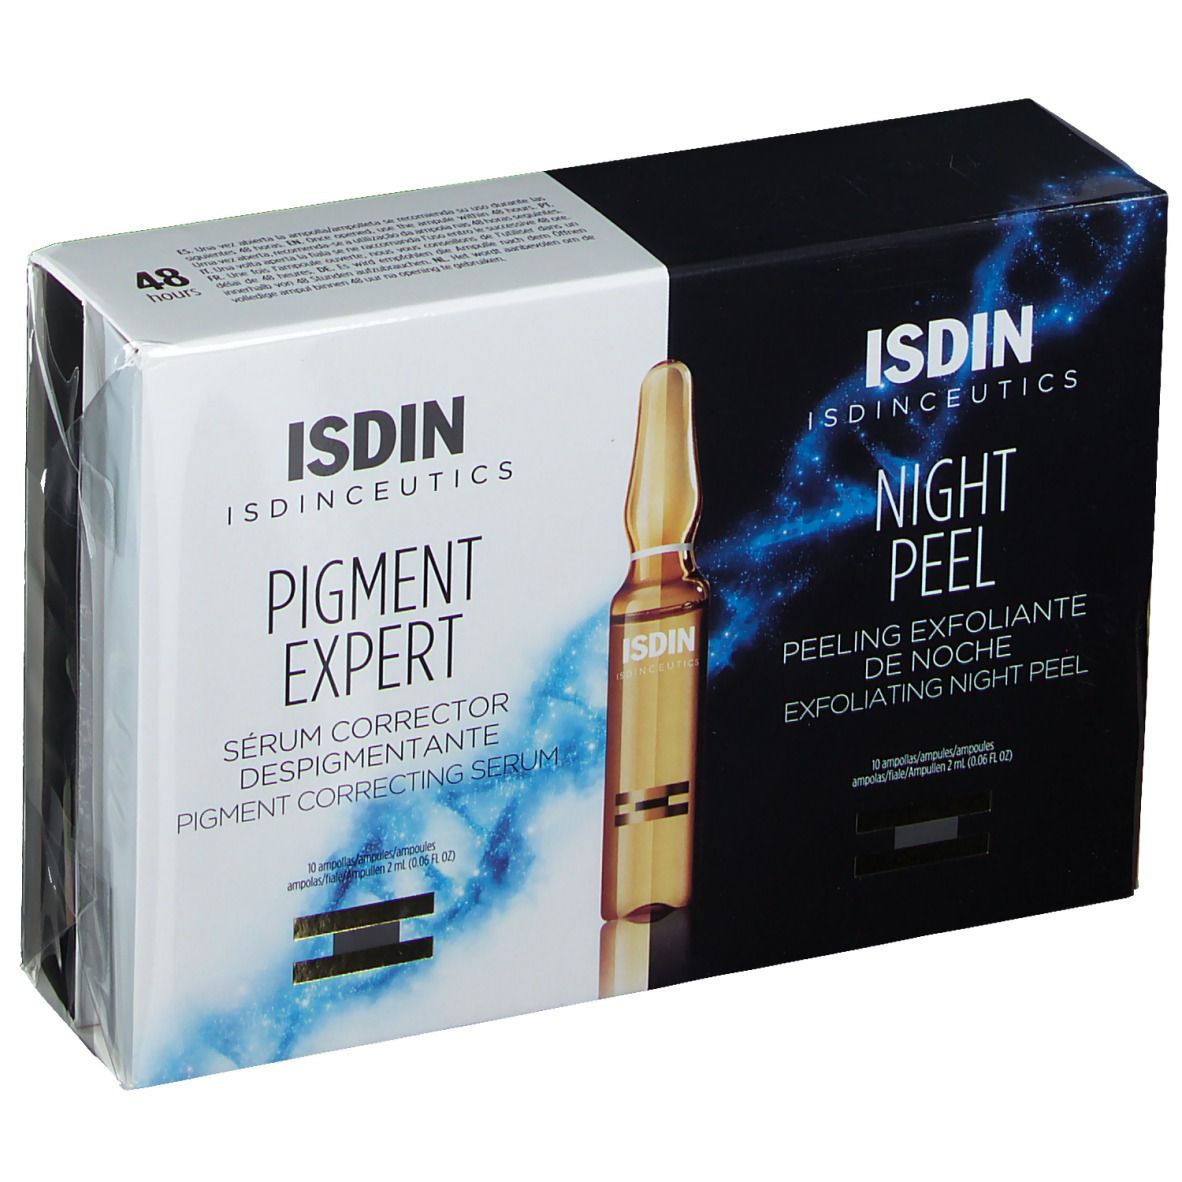 Isdin Isdinceutics Pigment Expert + Peeling de nuit